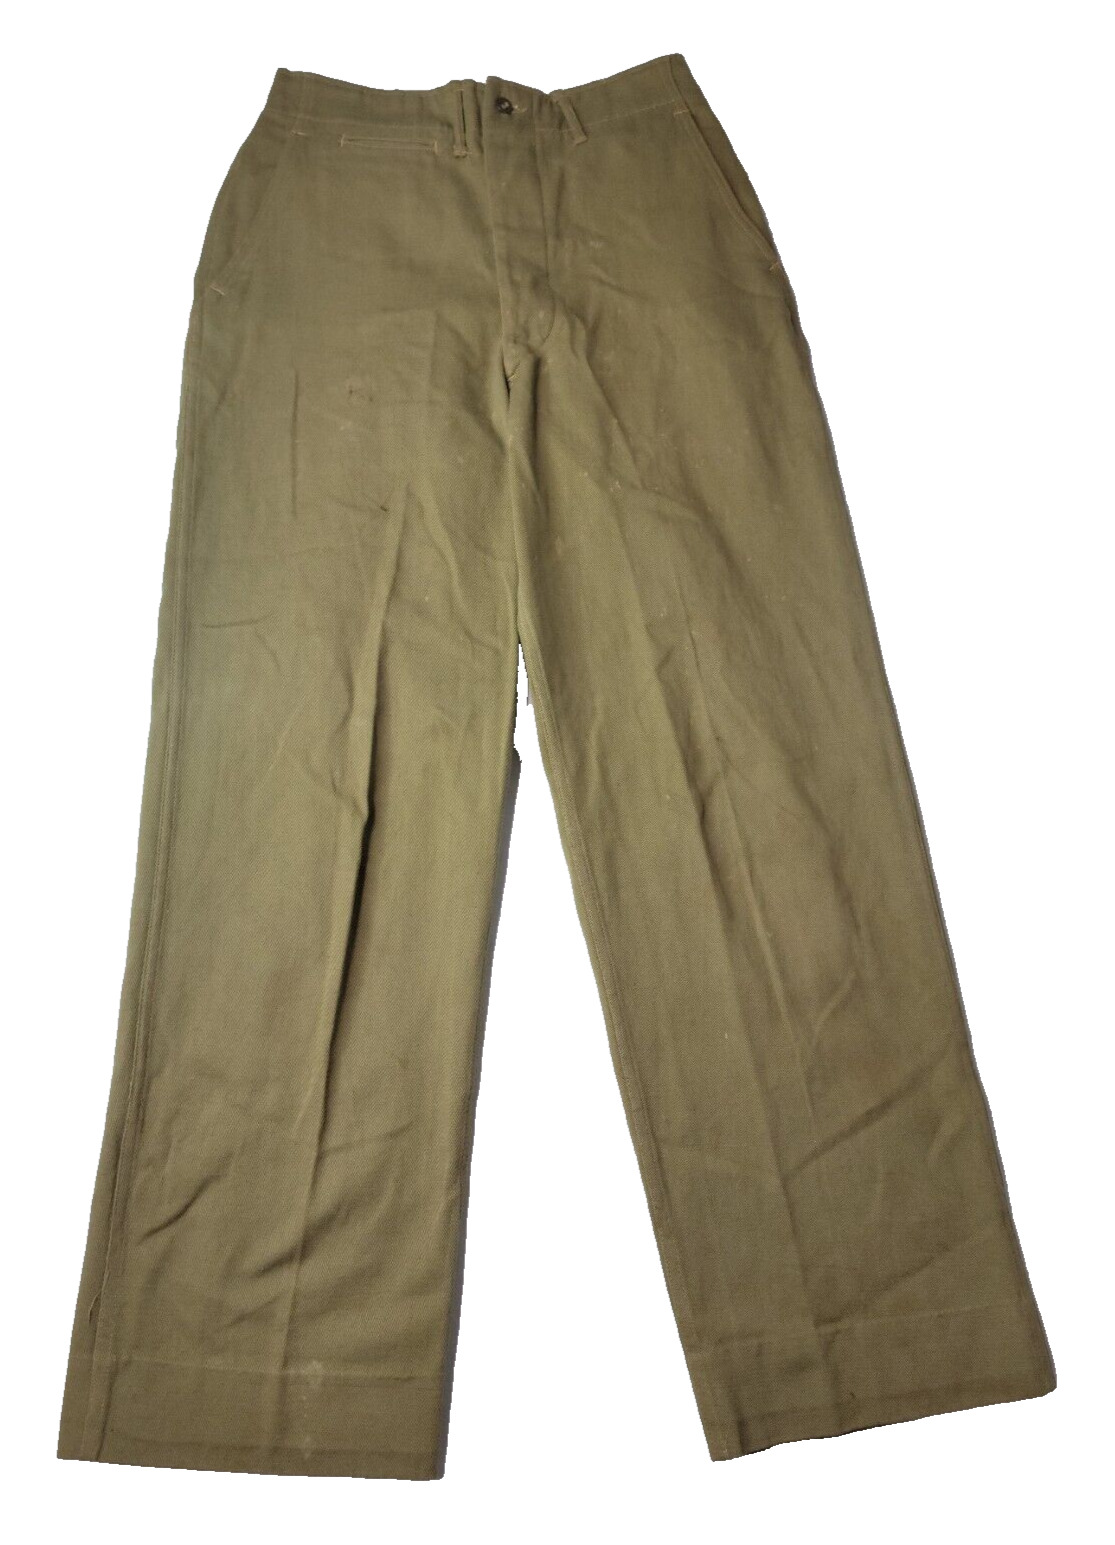 Boy Scouts Vintage 1940s WW2 Era OG Button Fly Pants Size 24x30